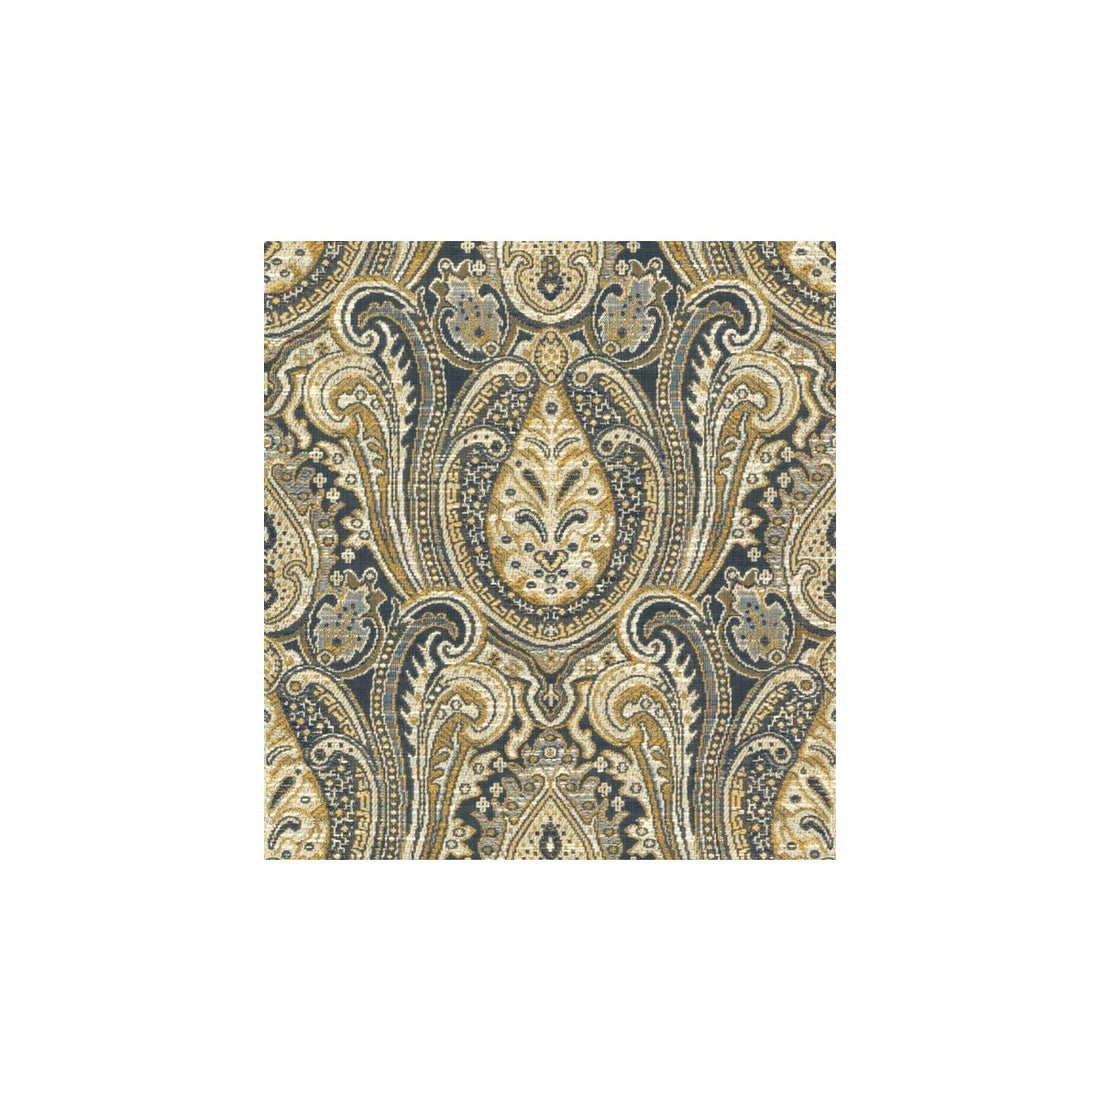 Kravet Design fabric in 31395-514 color - pattern 31395.514.0 - by Kravet Design in the Gis collection